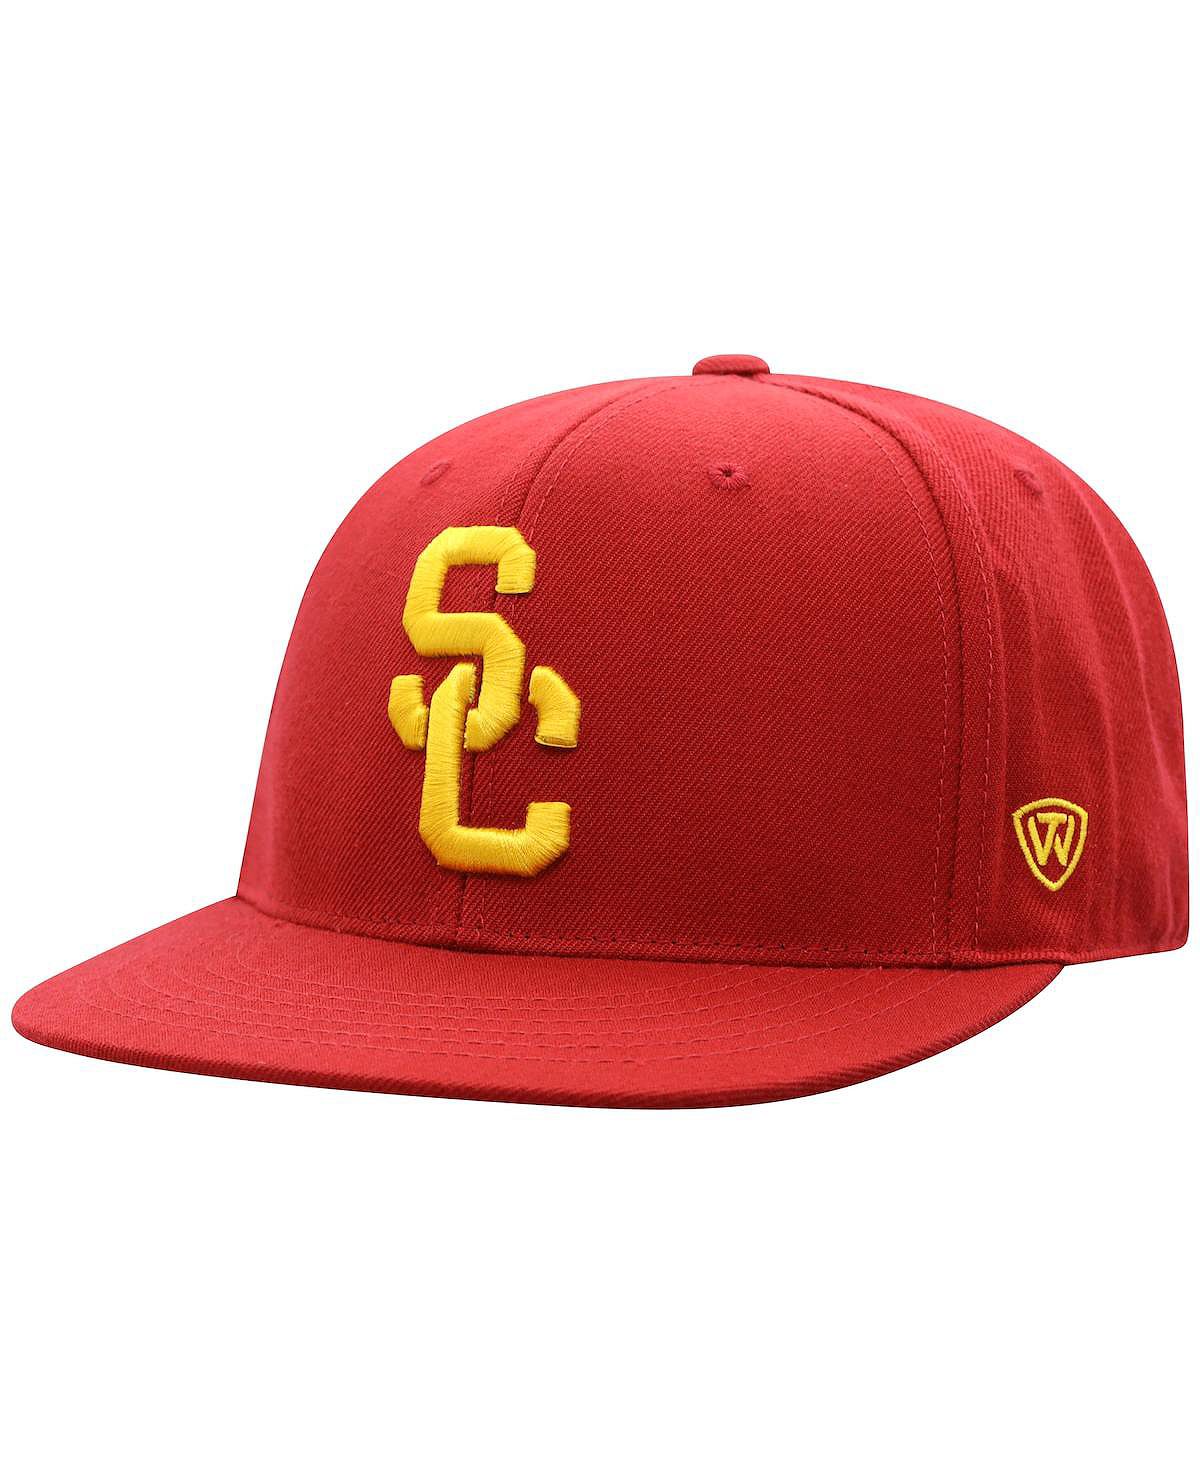 Мужская приталенная шляпа цвета Cardinal USC Trojans Team Top of the World